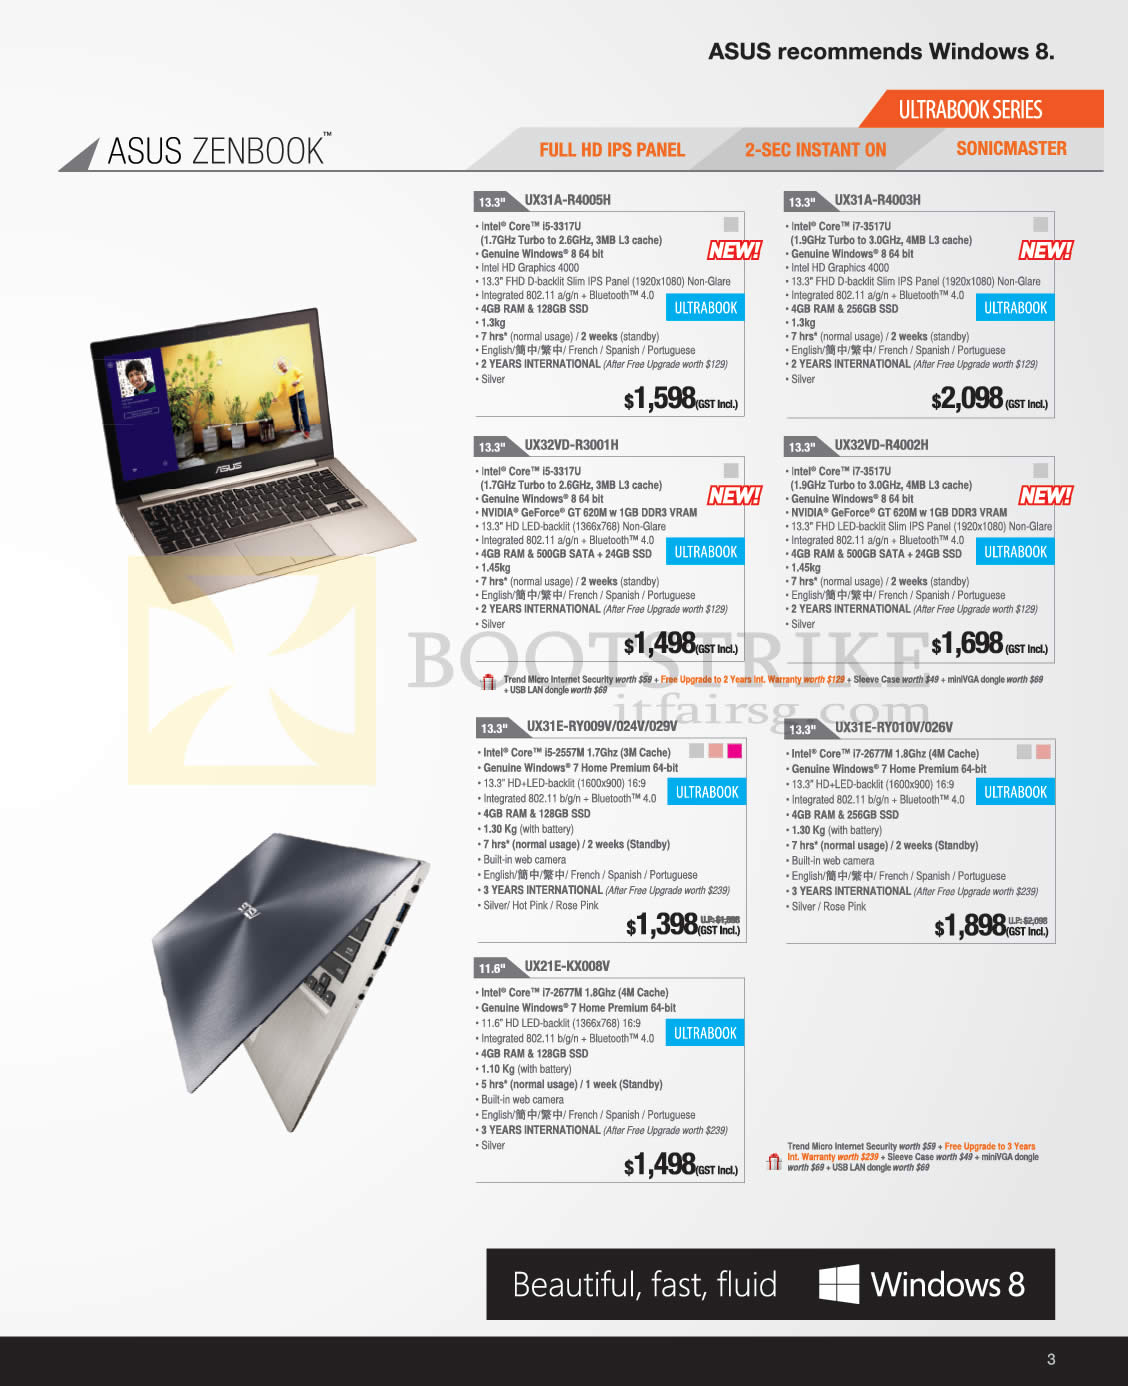 SITEX 2012 price list image brochure of ASUS Notebooks Zenbook UX31A-R4005H, UX31A-R4003H, UX32VD-R3001H, UX32VD-R4002H, UX31E-RY009V024V029V, UX31E-RY010V026V